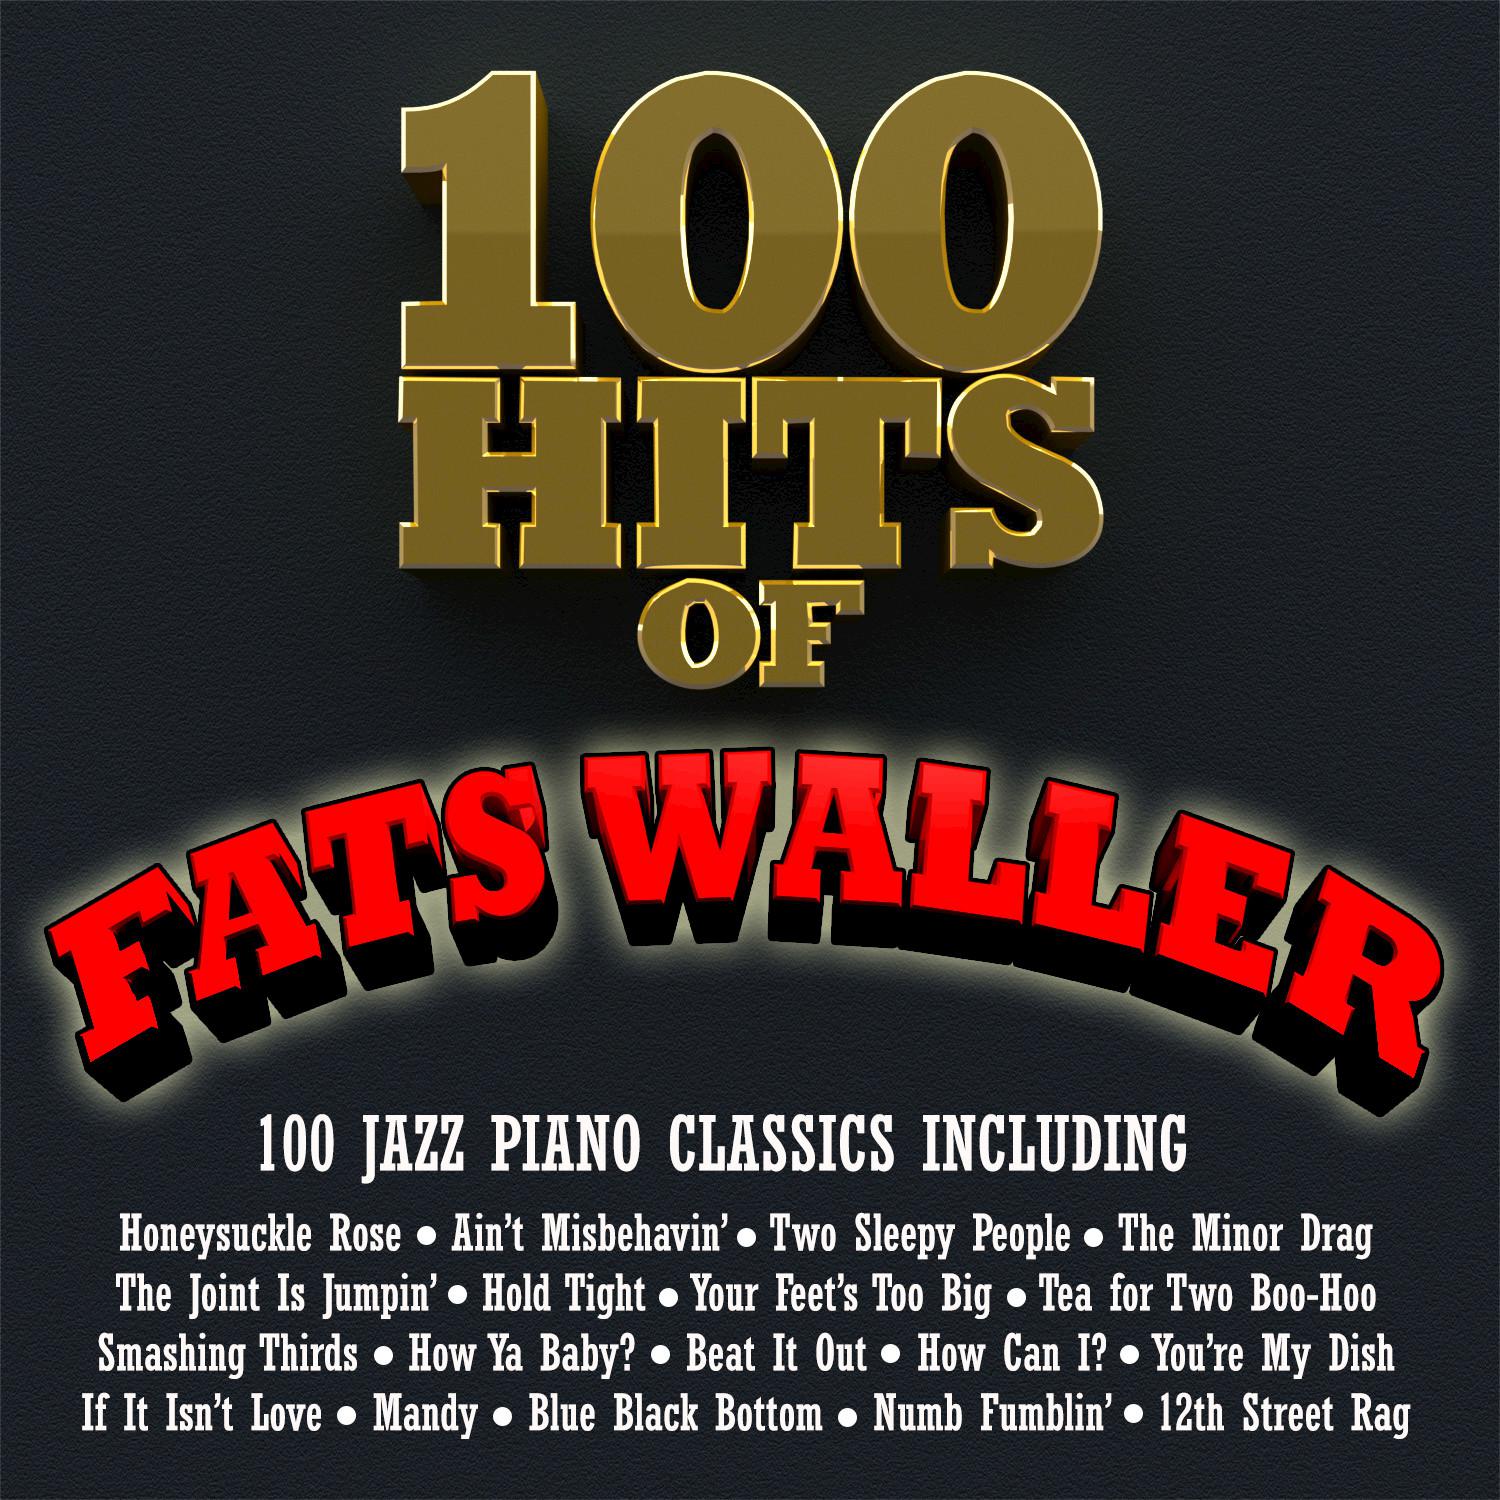 100 Hits of Fats Waller